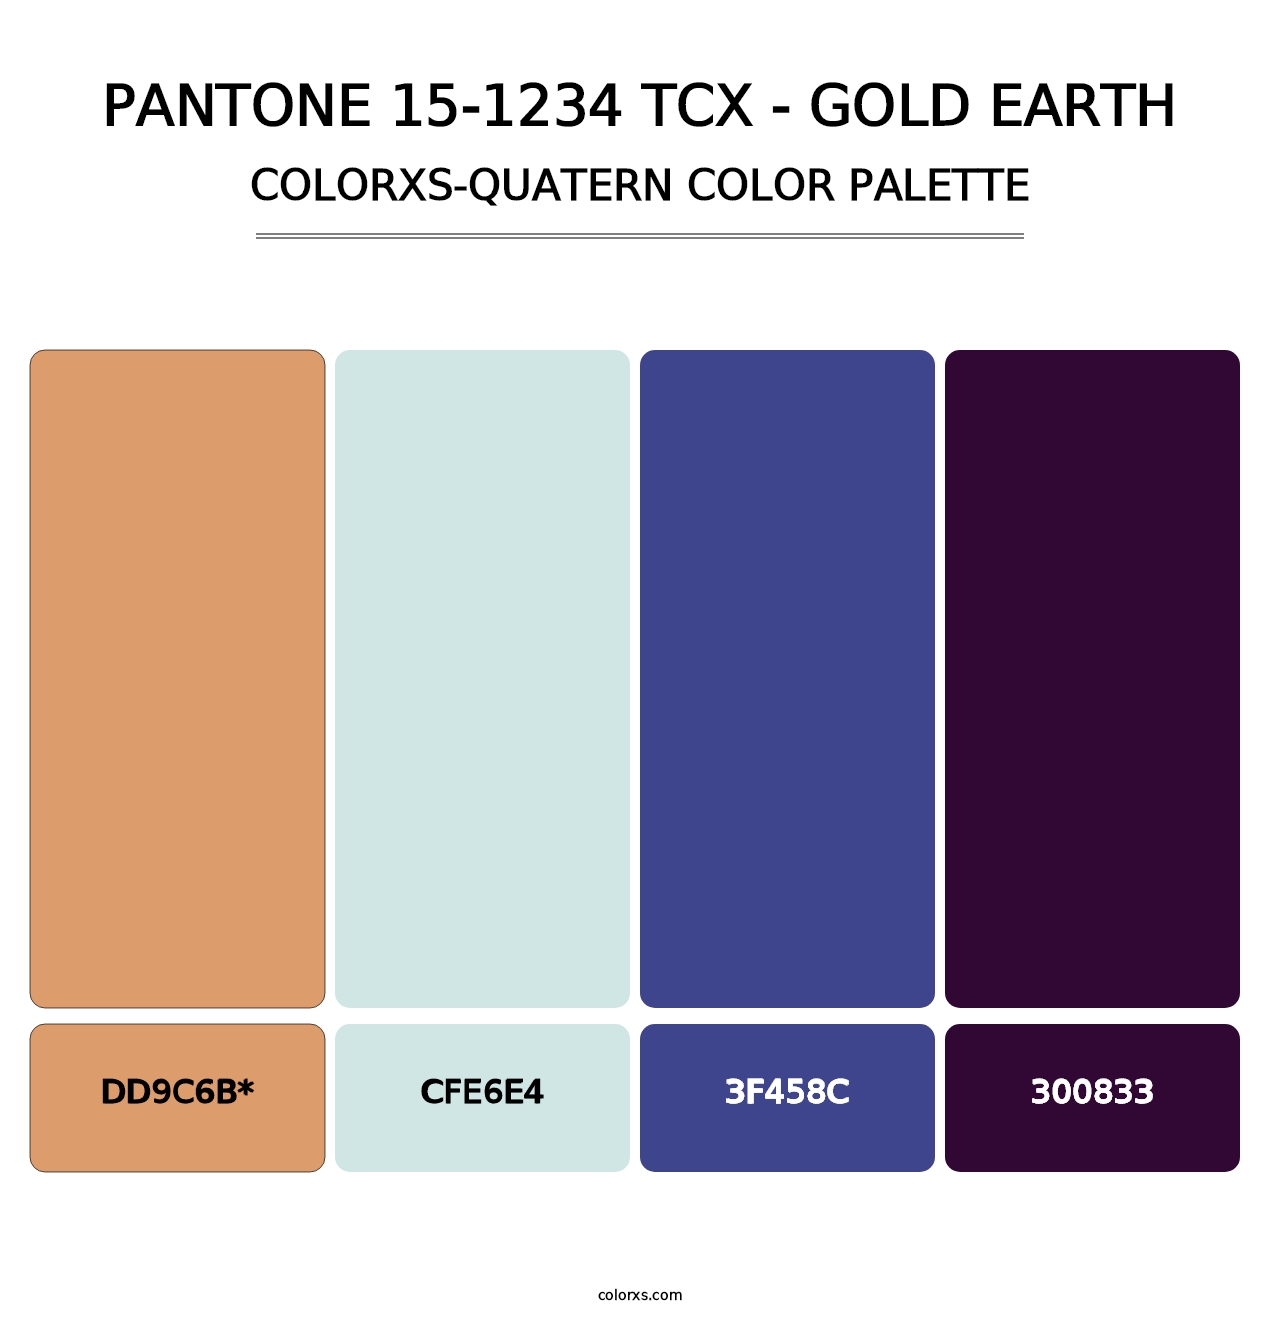 PANTONE 15-1234 TCX - Gold Earth - Colorxs Quatern Palette